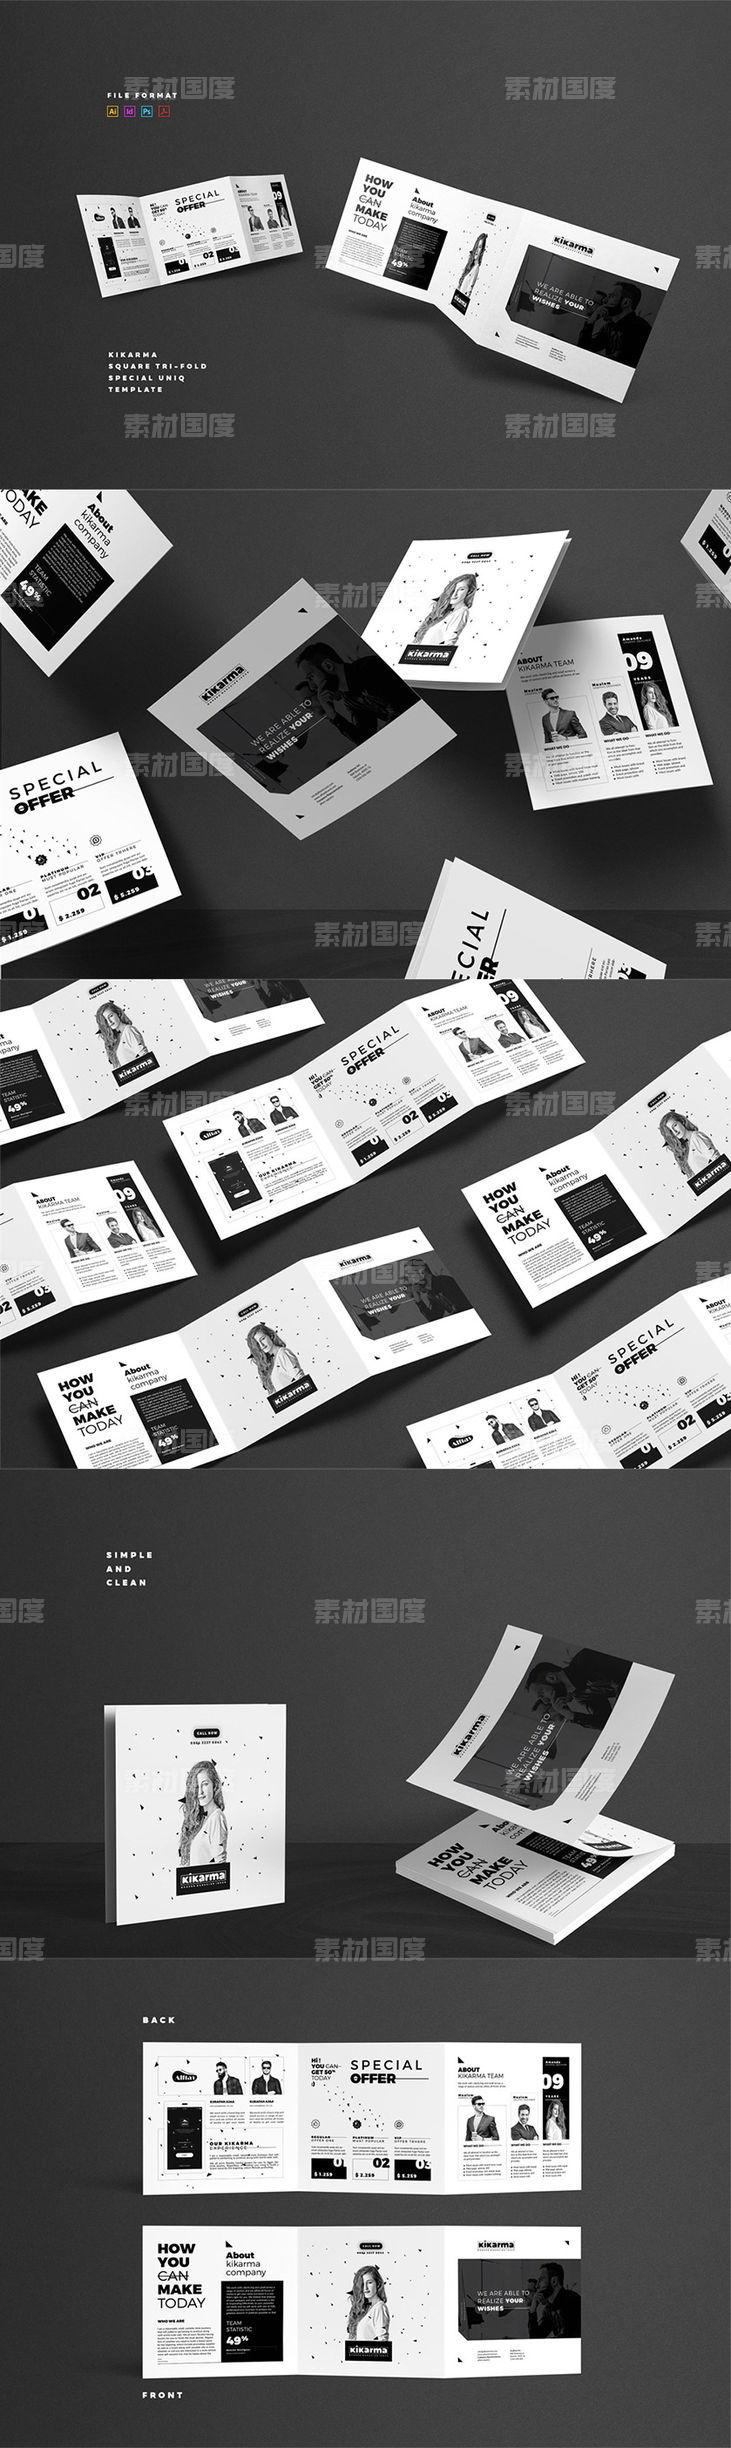 方形折叠画册宣传册模板 Square Tri fold Brochure